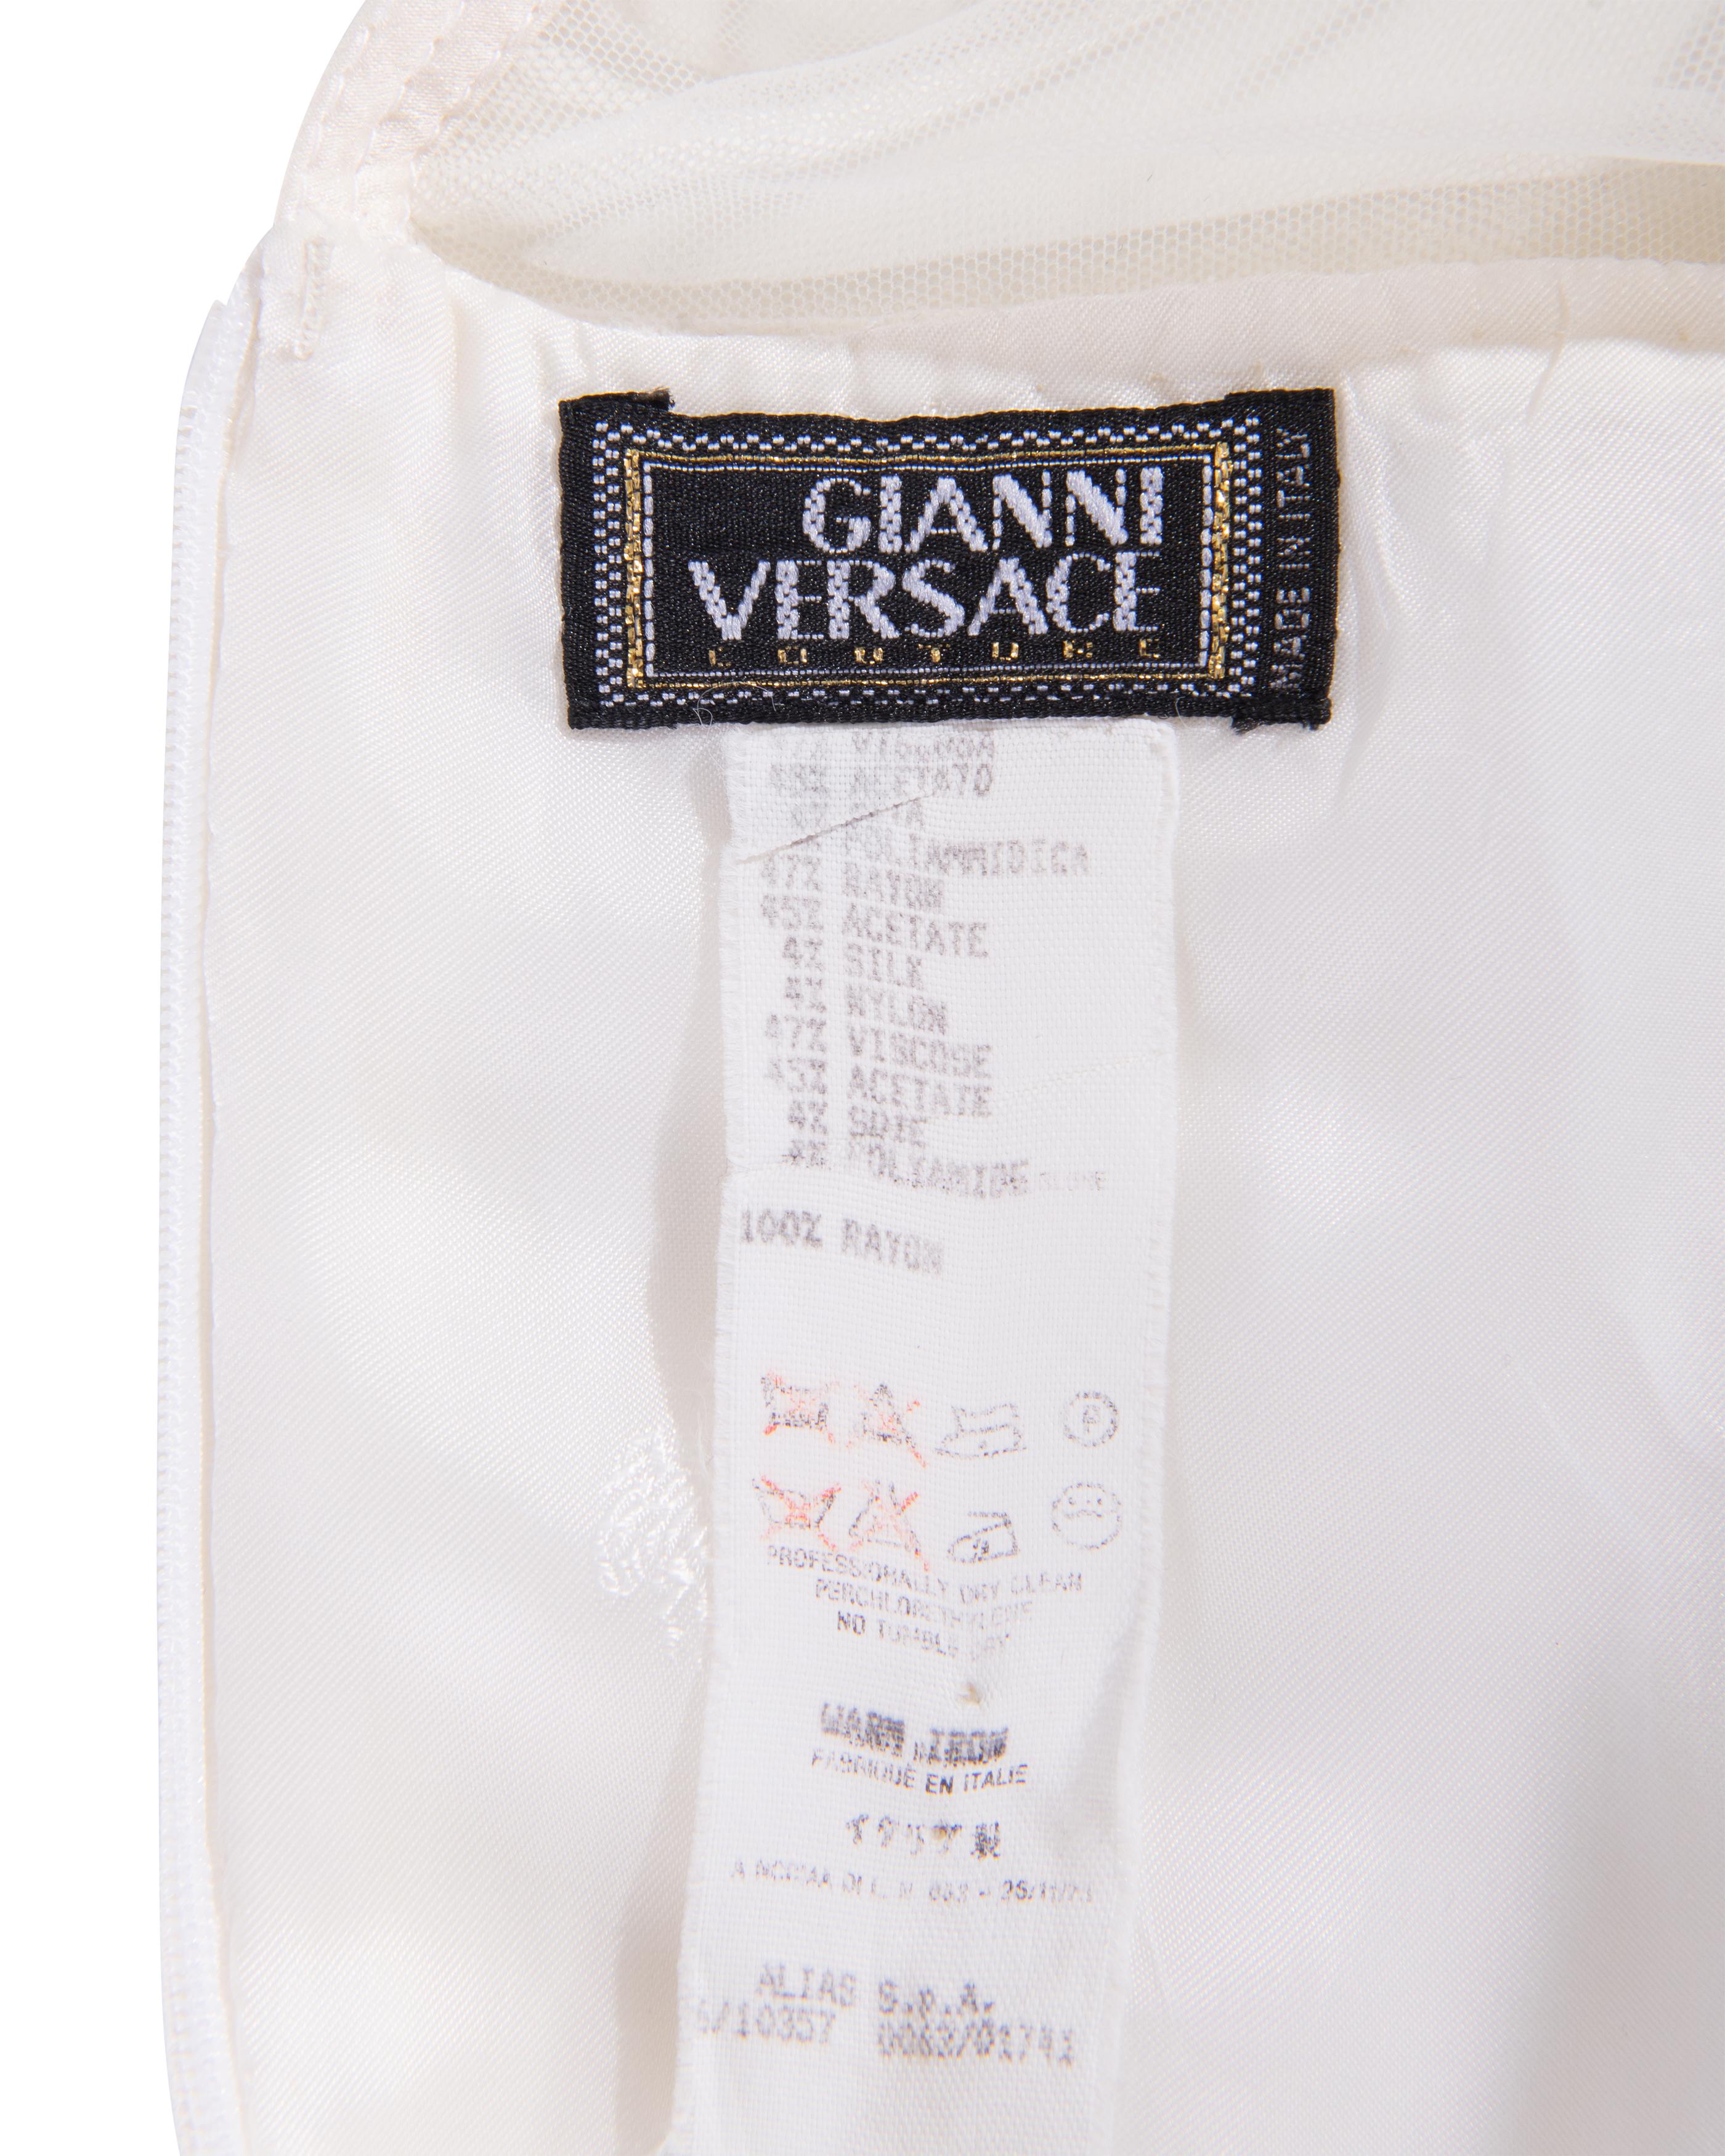 S/S 1996 Gianni Versace White Mesh Mini Dress 3